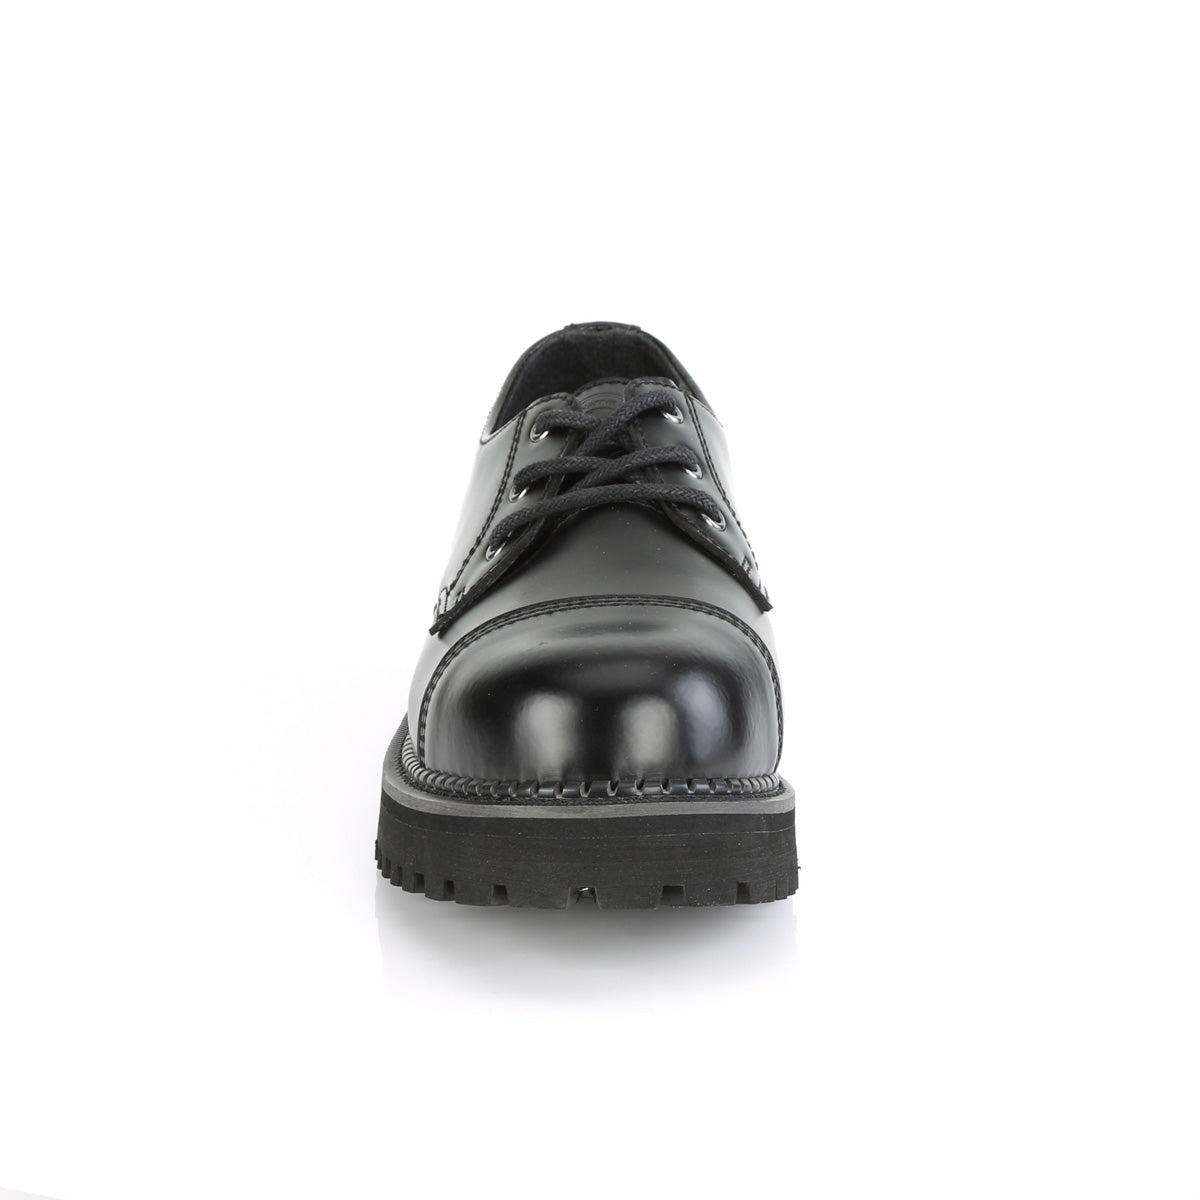 DEMONIA Riot-03 Black Real Leather Men's Goth Rocker Classic Dress Wedding Shoes - A Shoe Addiction